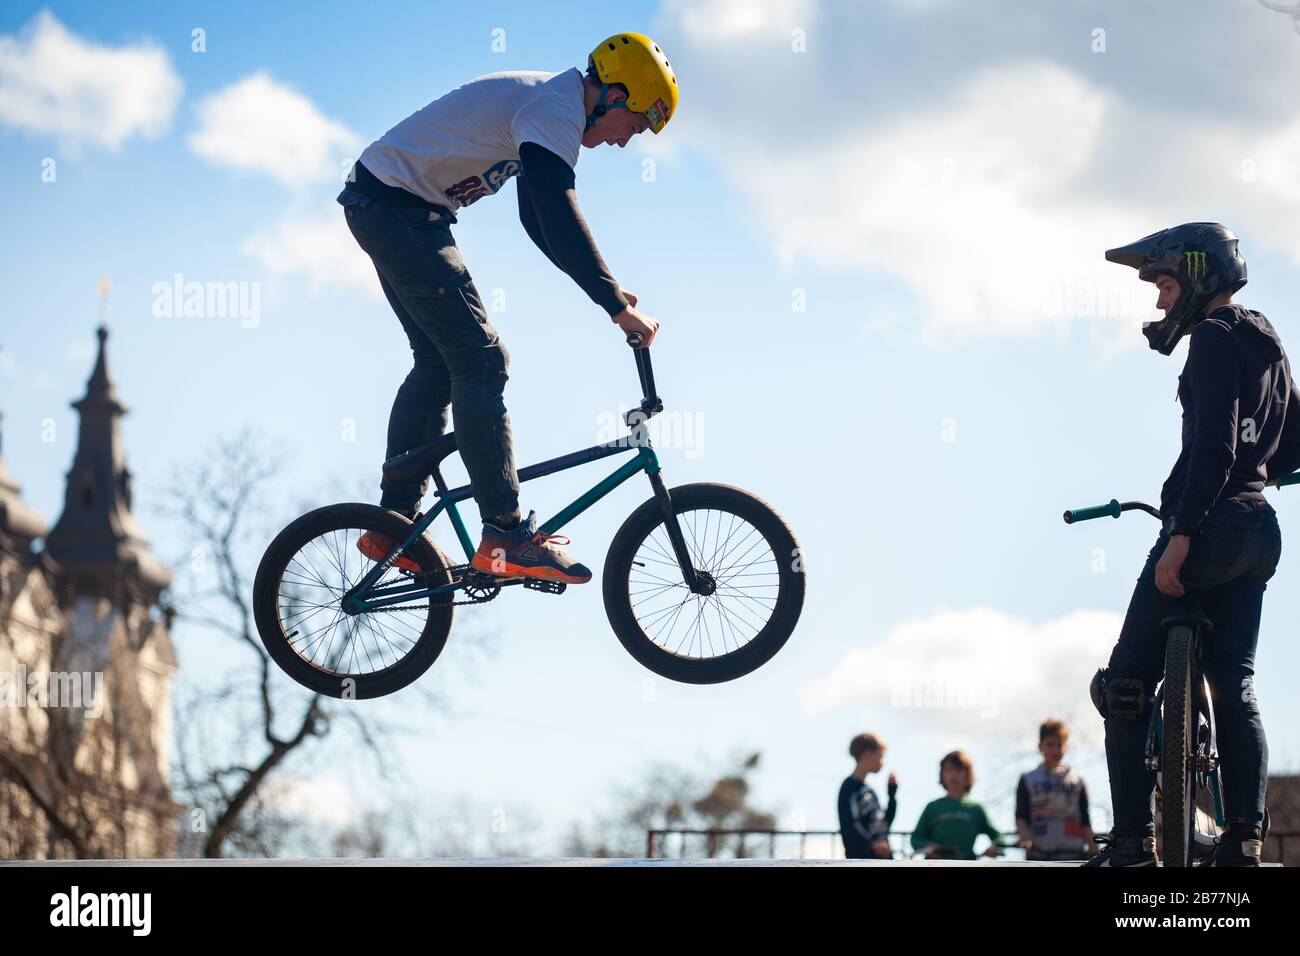 Lviv, Ukraine - March 12, 2020: Young man doing tricks on a BMX bike.  Teenagers bikes at an urban biking and Skate park Stock Photo - Alamy